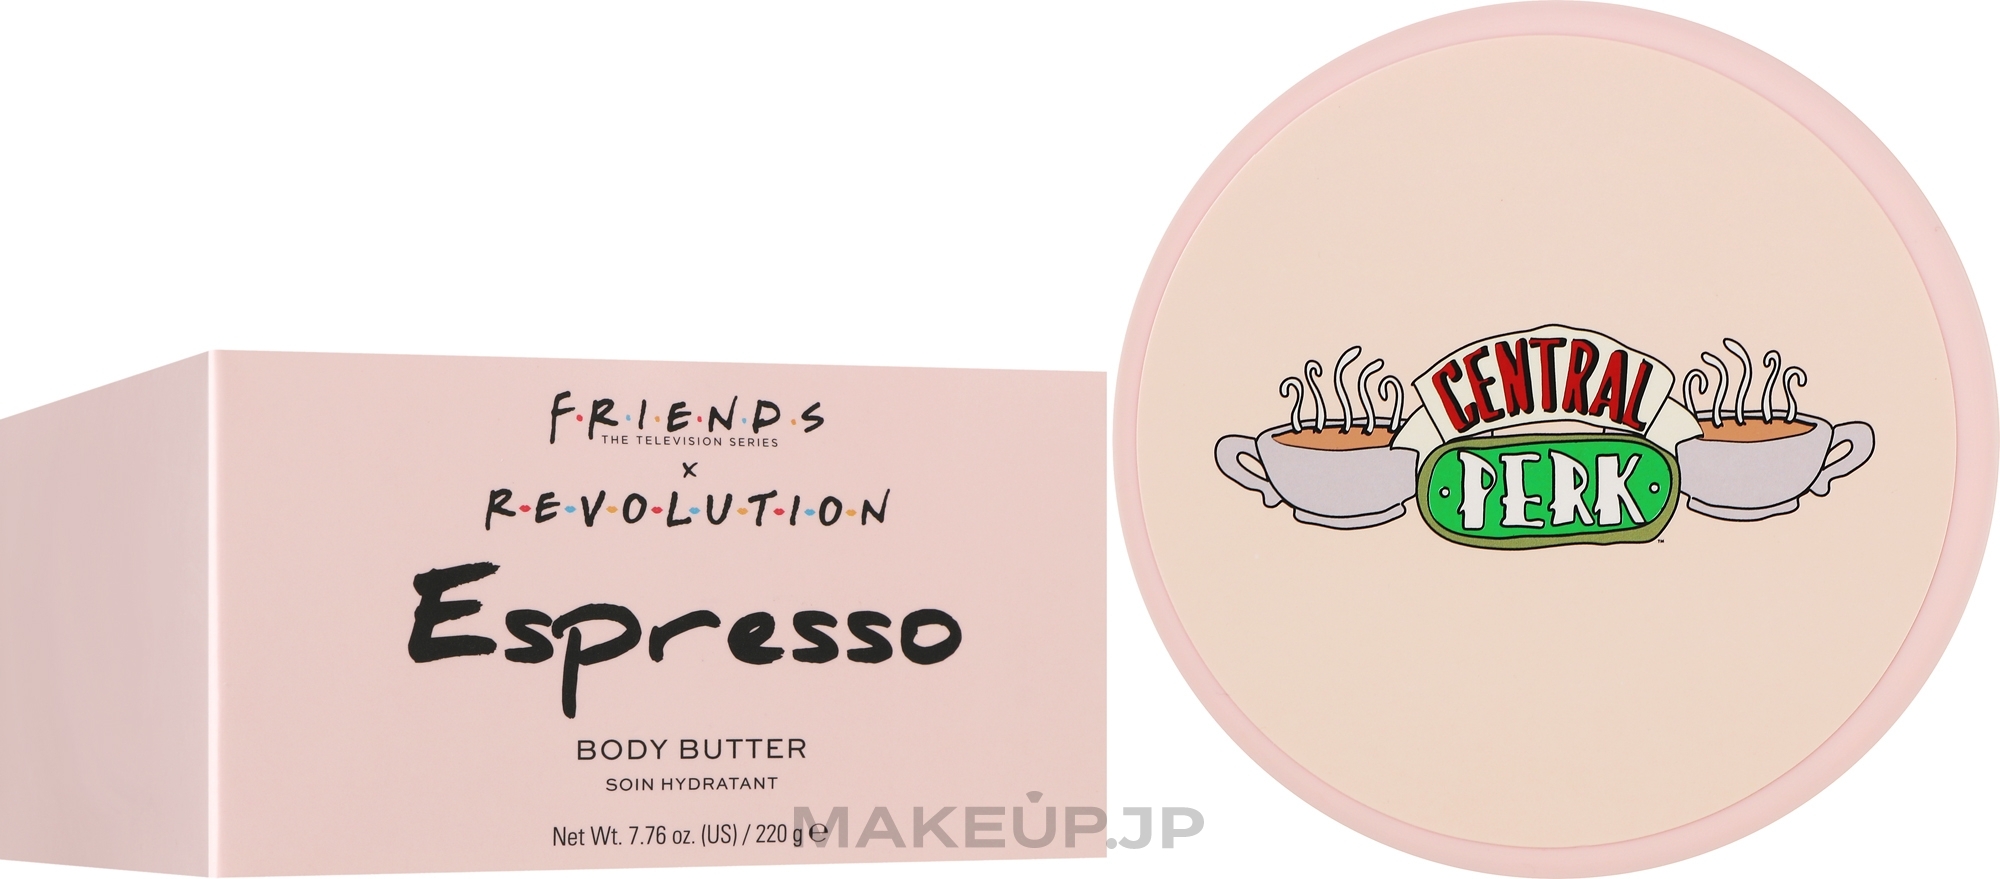 Espresso Body Butter - Makeup Revolution X Friends Espresso Body Butter — photo 220 g